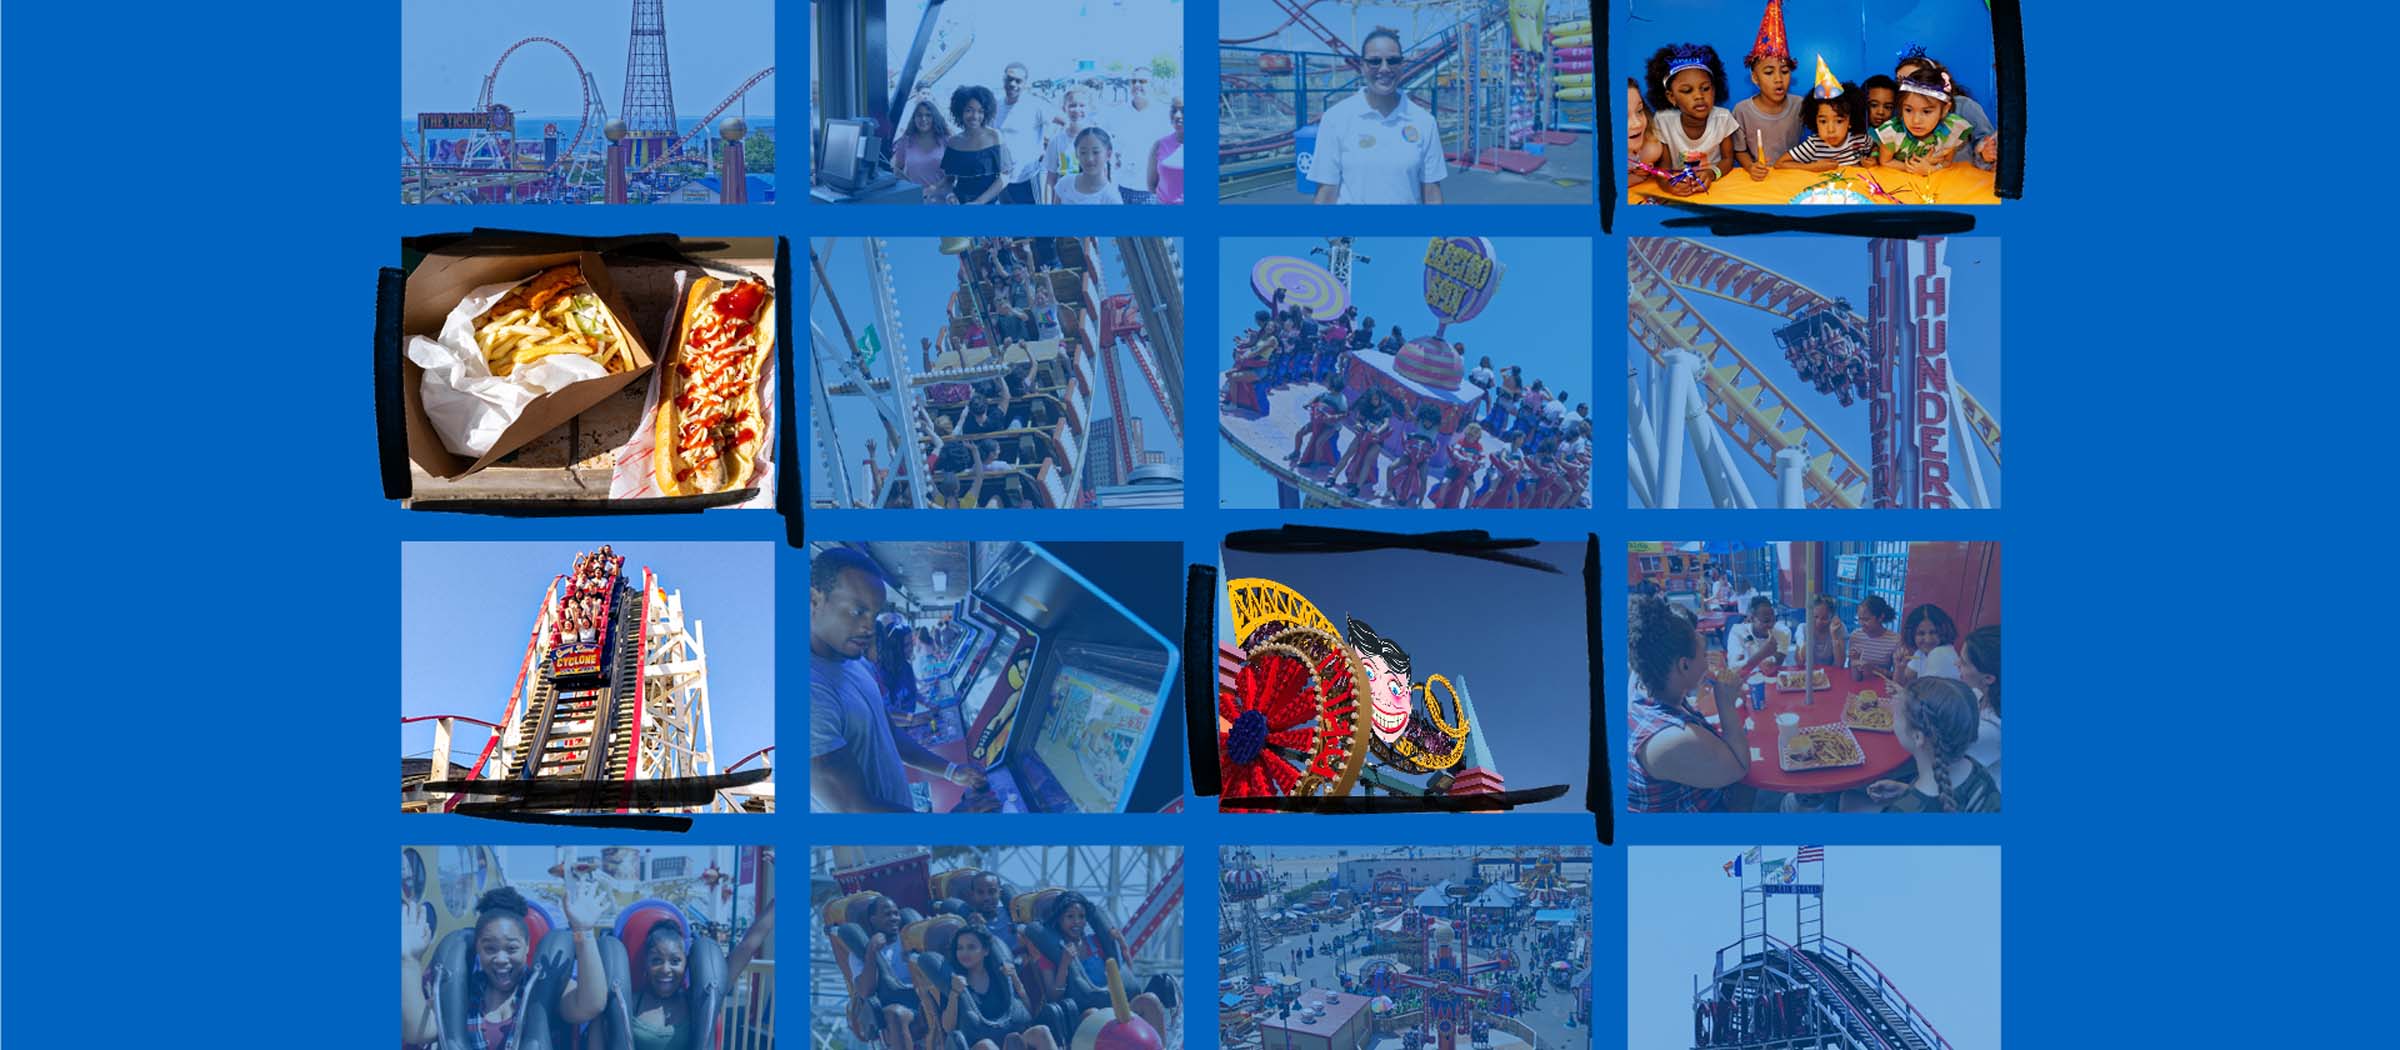 Luna Park in Coney Island - Website Photo Improvements Contact Sheet Image